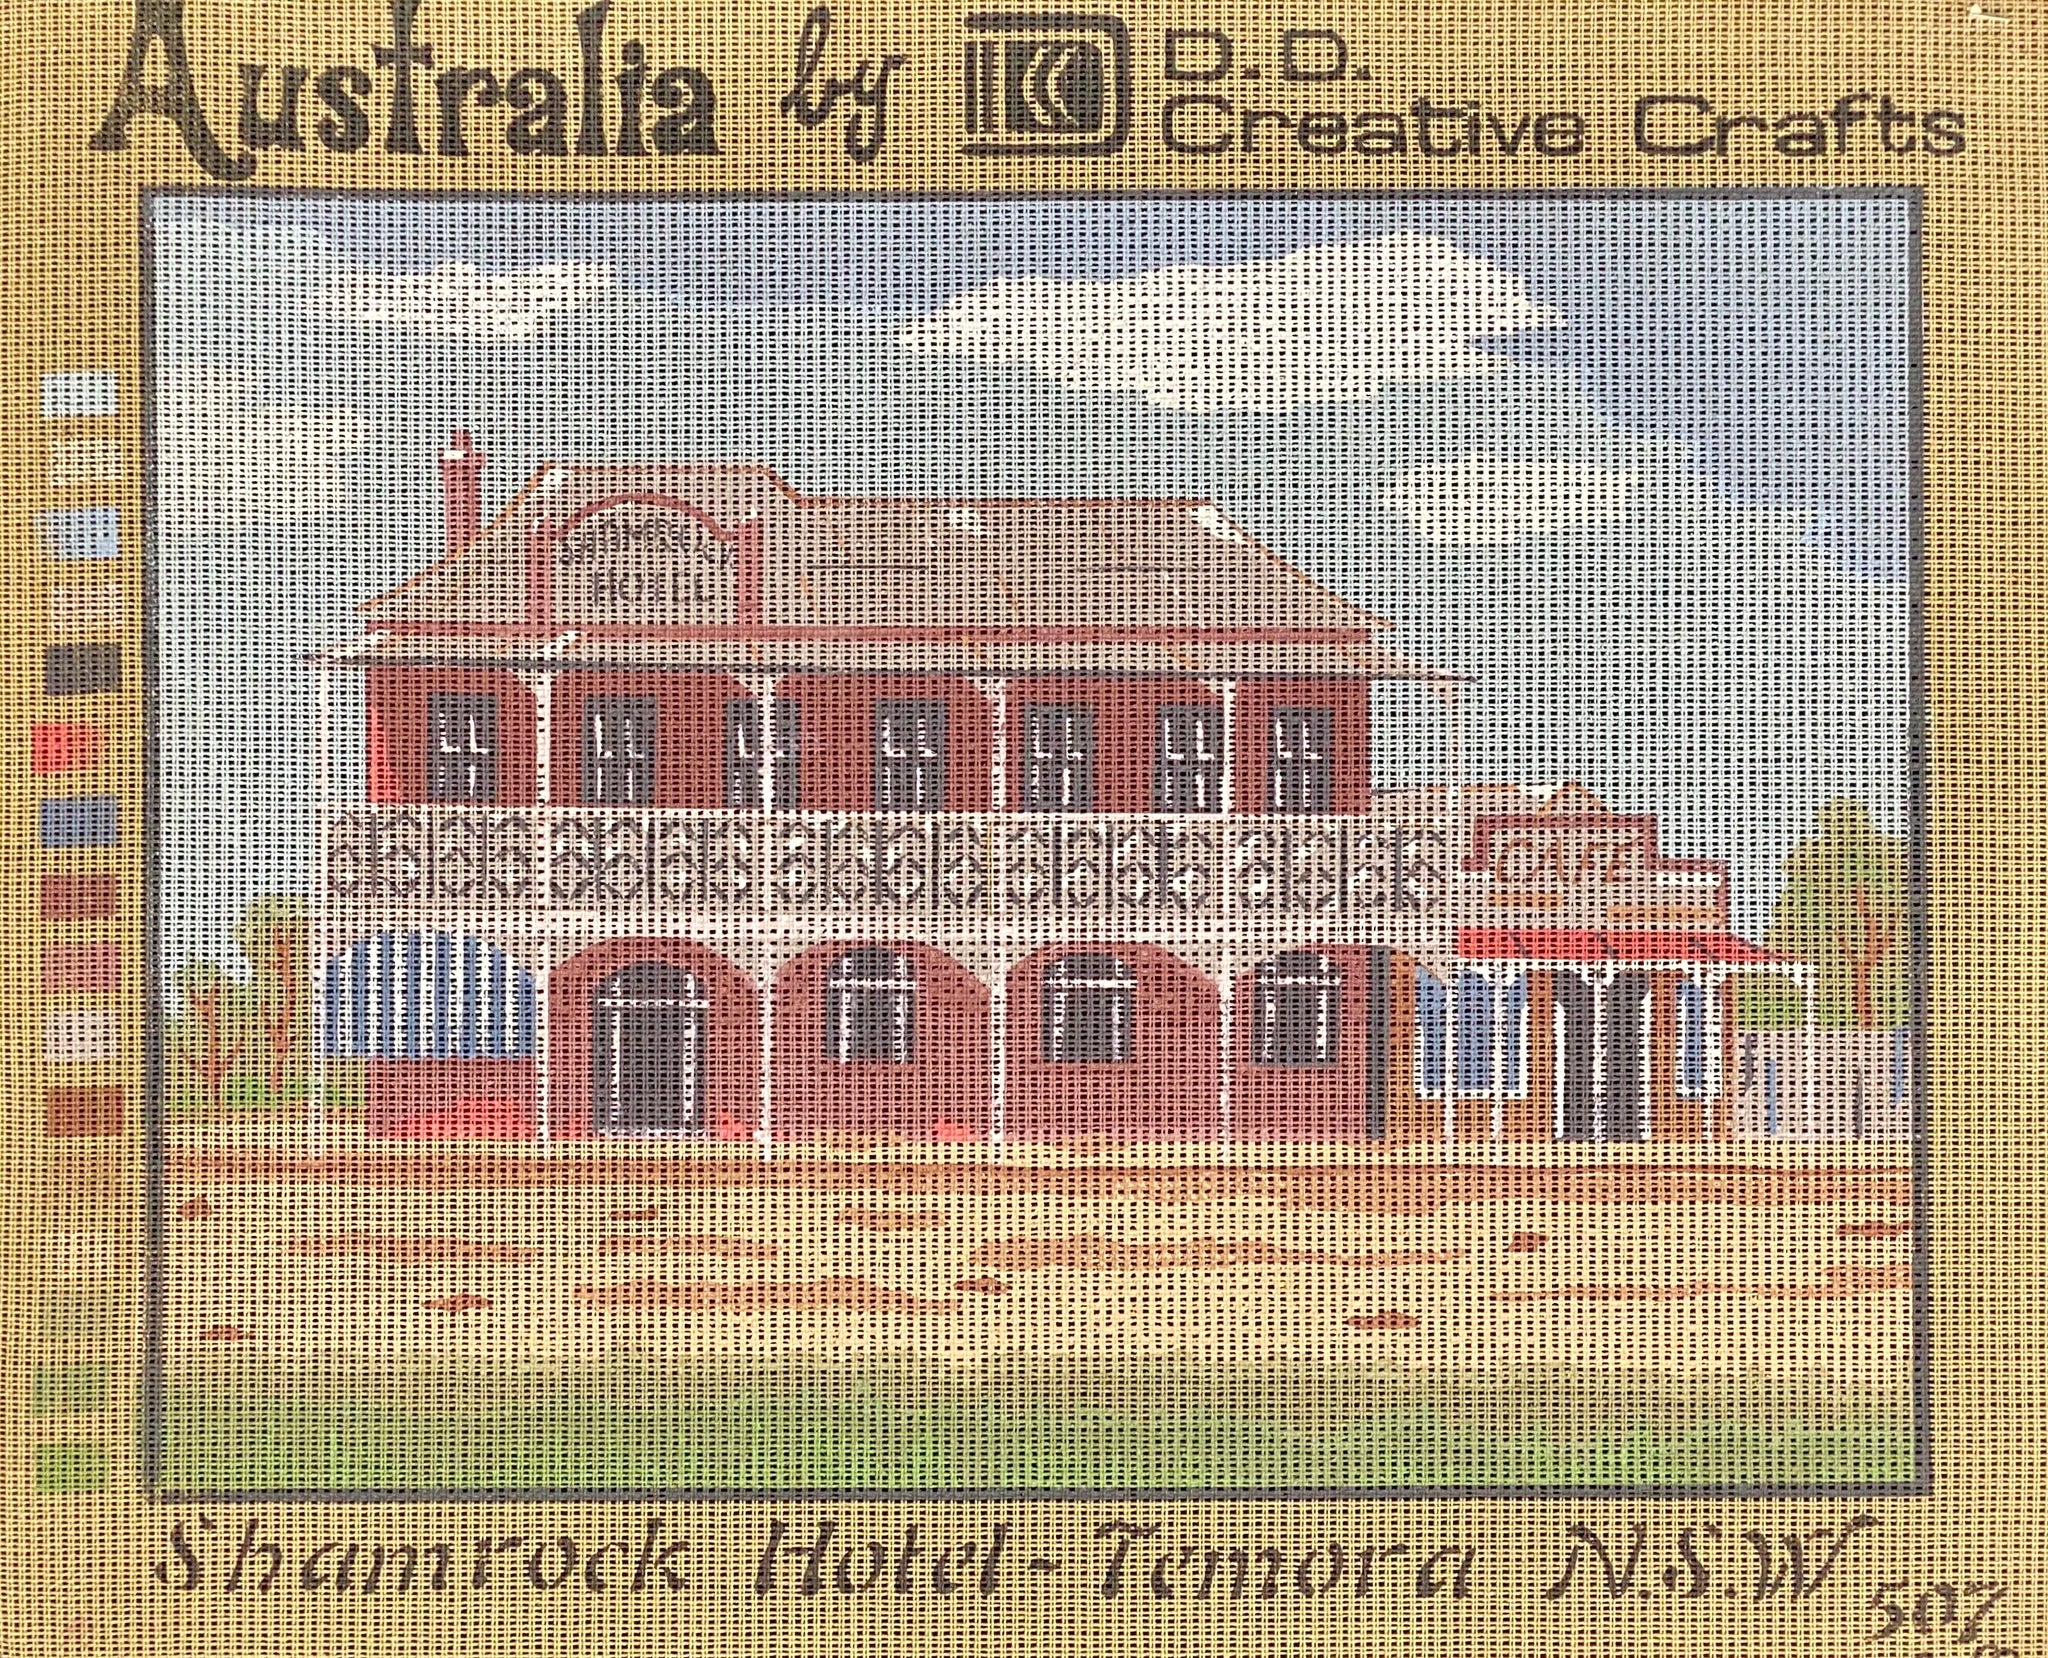 Shamrock Hotel - Temora NSW